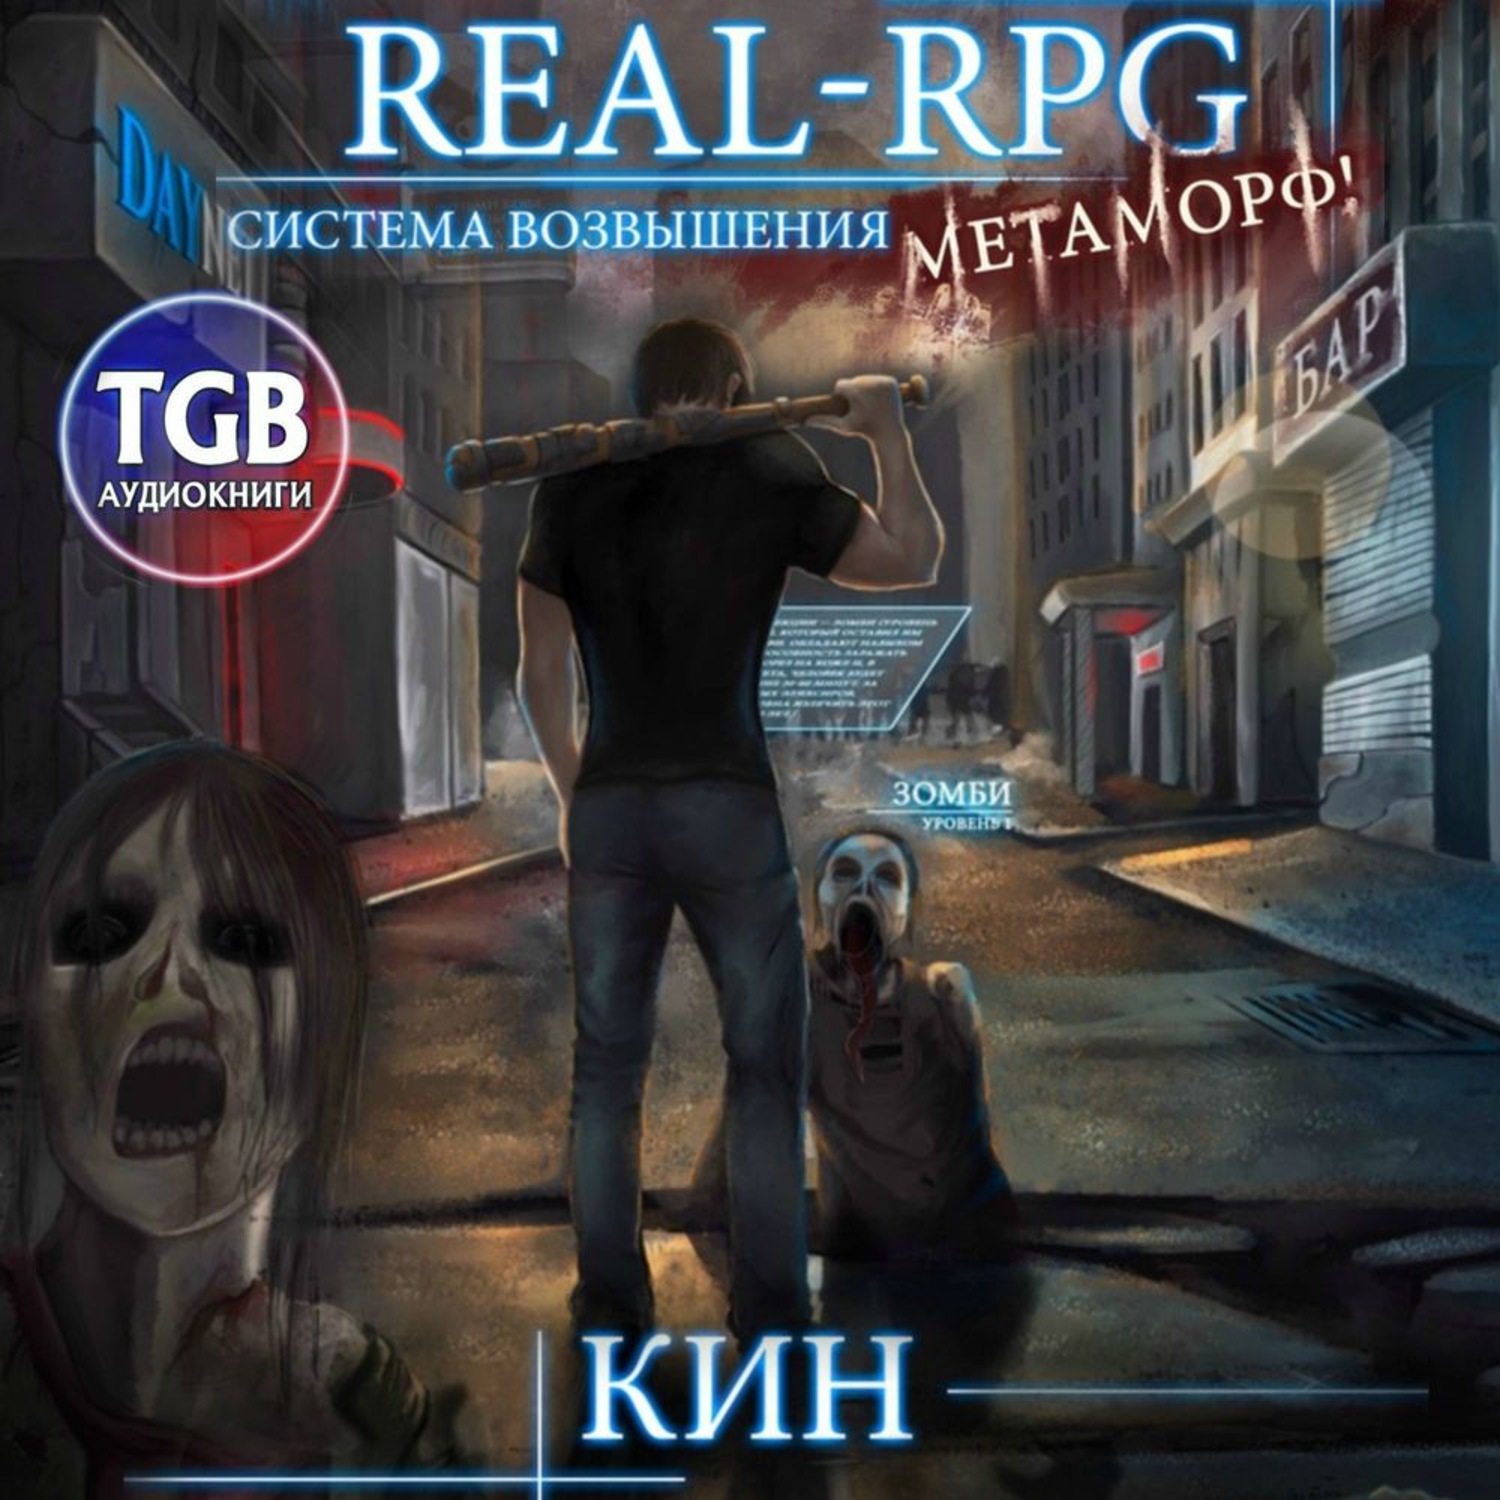 Real rpg 11. Аудиокнига Реал РПГ. Система возвышения Метаморф. Метаморф Кин. Кин Метаморф книга.